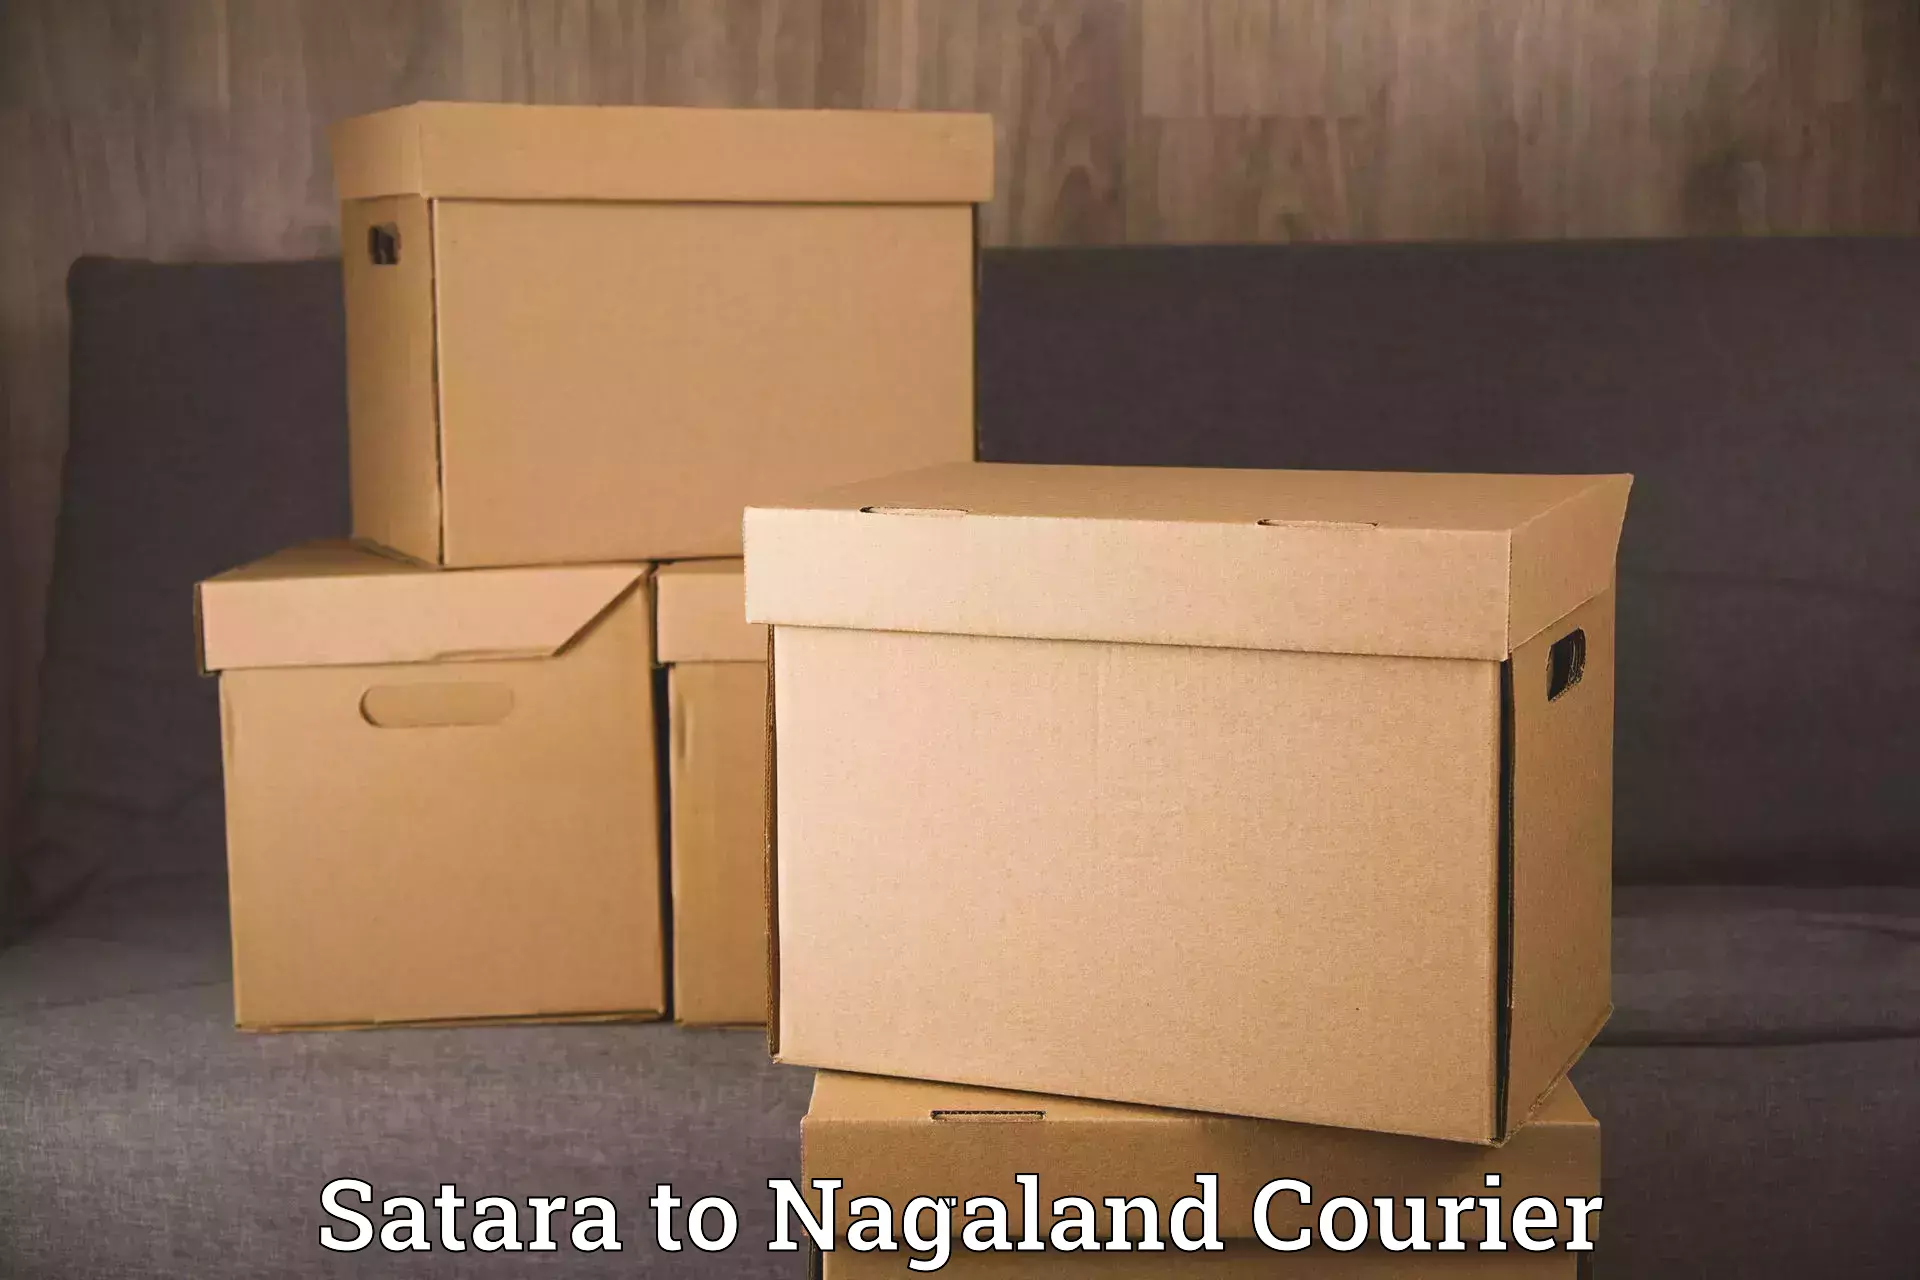 Professional moving company Satara to Nagaland